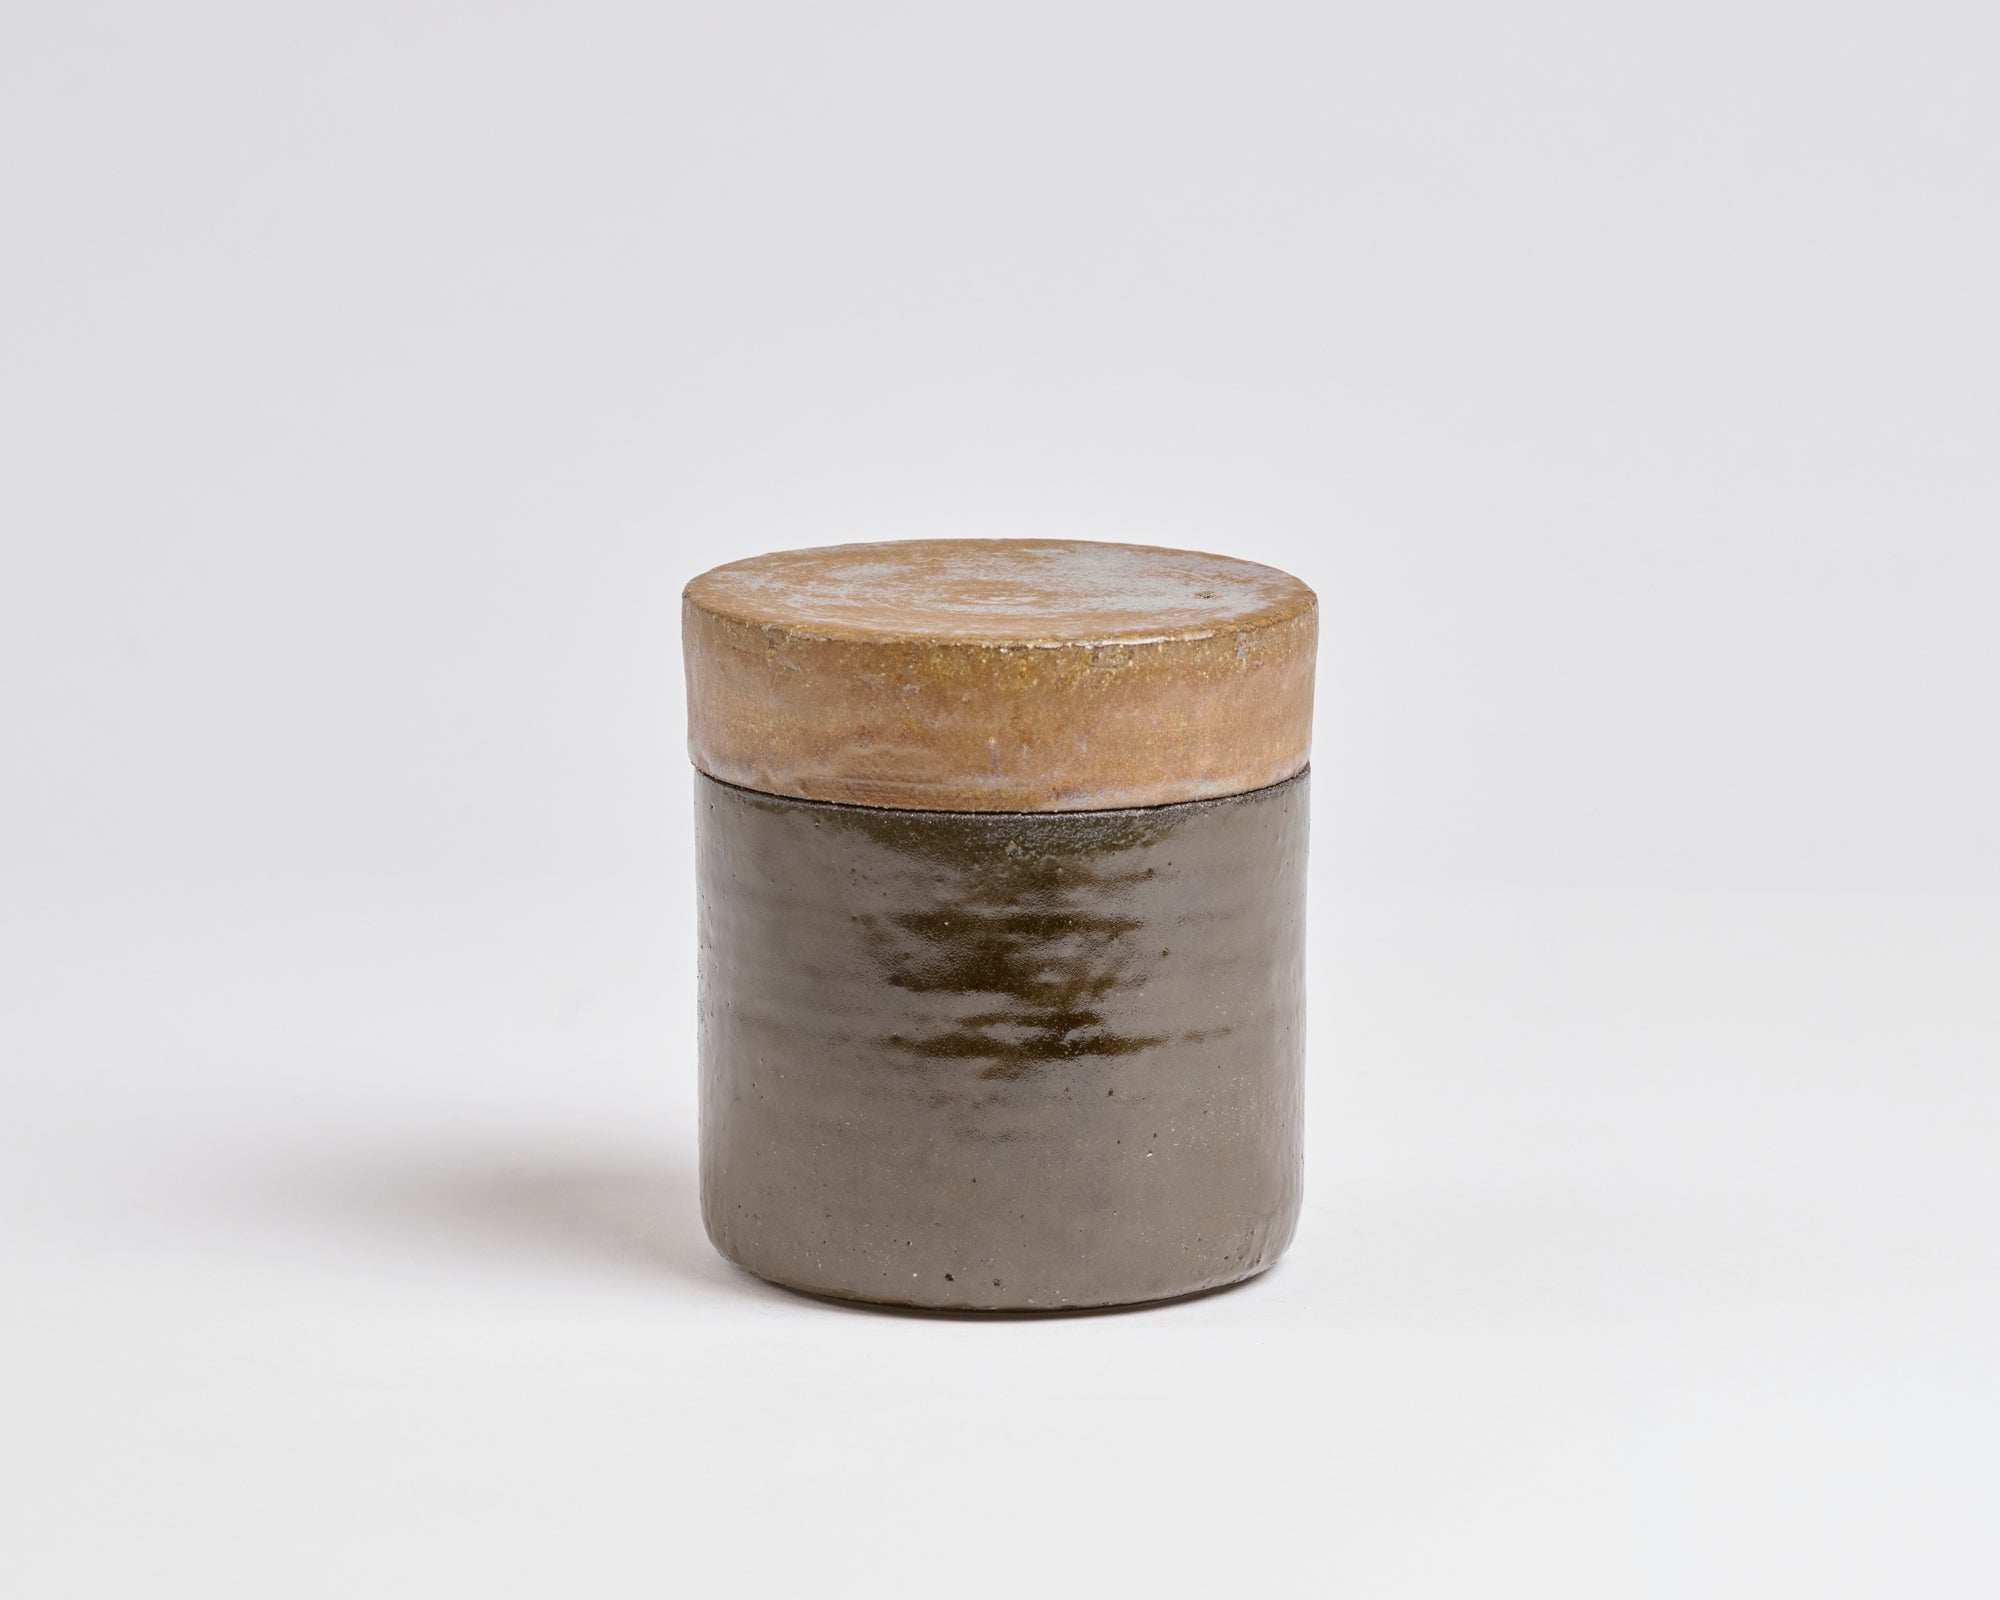 Szilvassy Ceramic Jar 008 - Tan / Umber Tenmoku (Small)